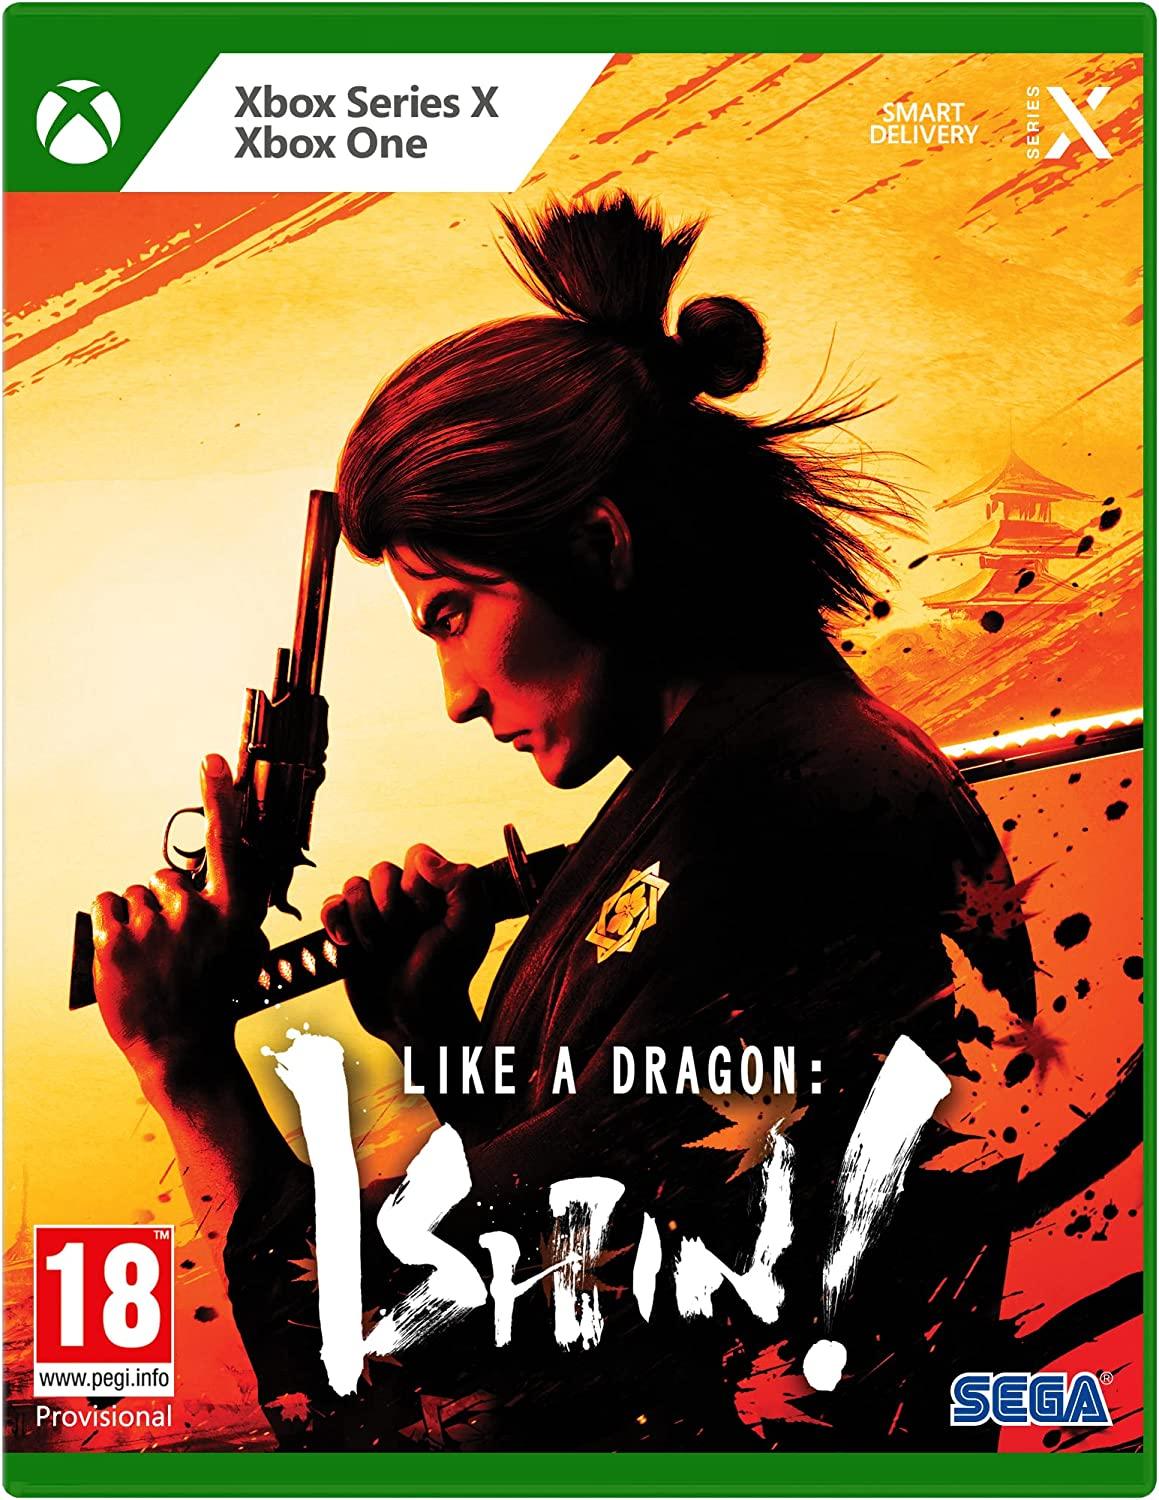 Like a Dragon: Ishin! (Xbox Series X) (Xbox One) - GameStore.mt | Powered by Flutisat